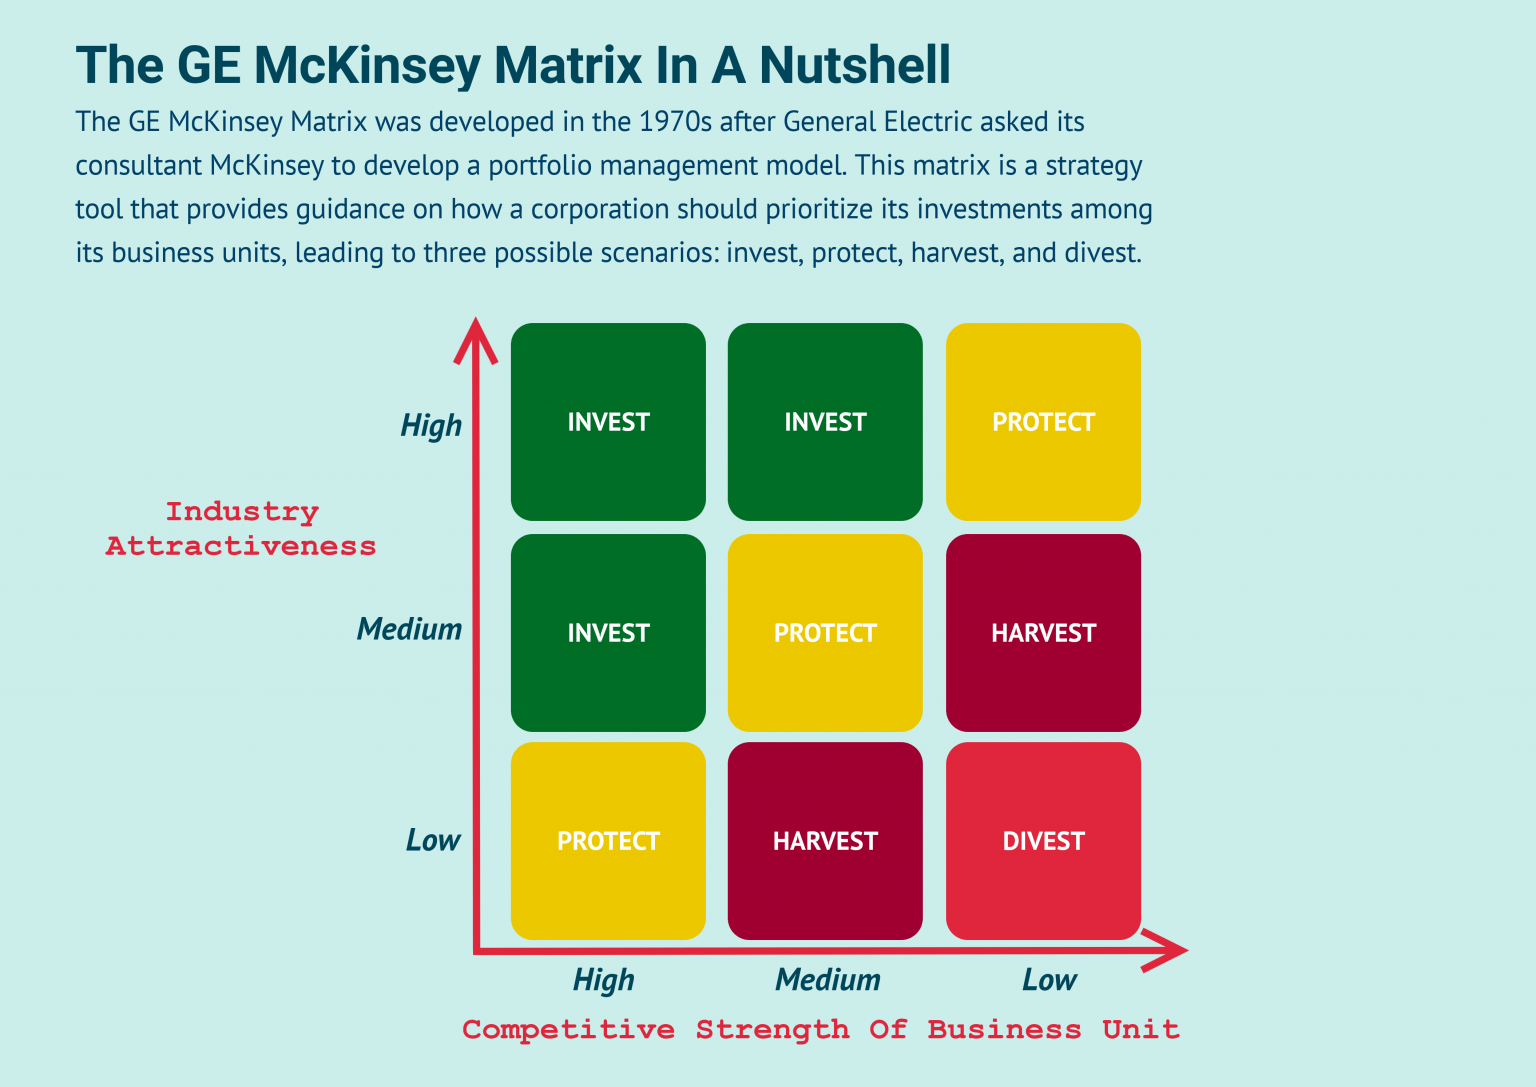 mckinsey market research report pdf